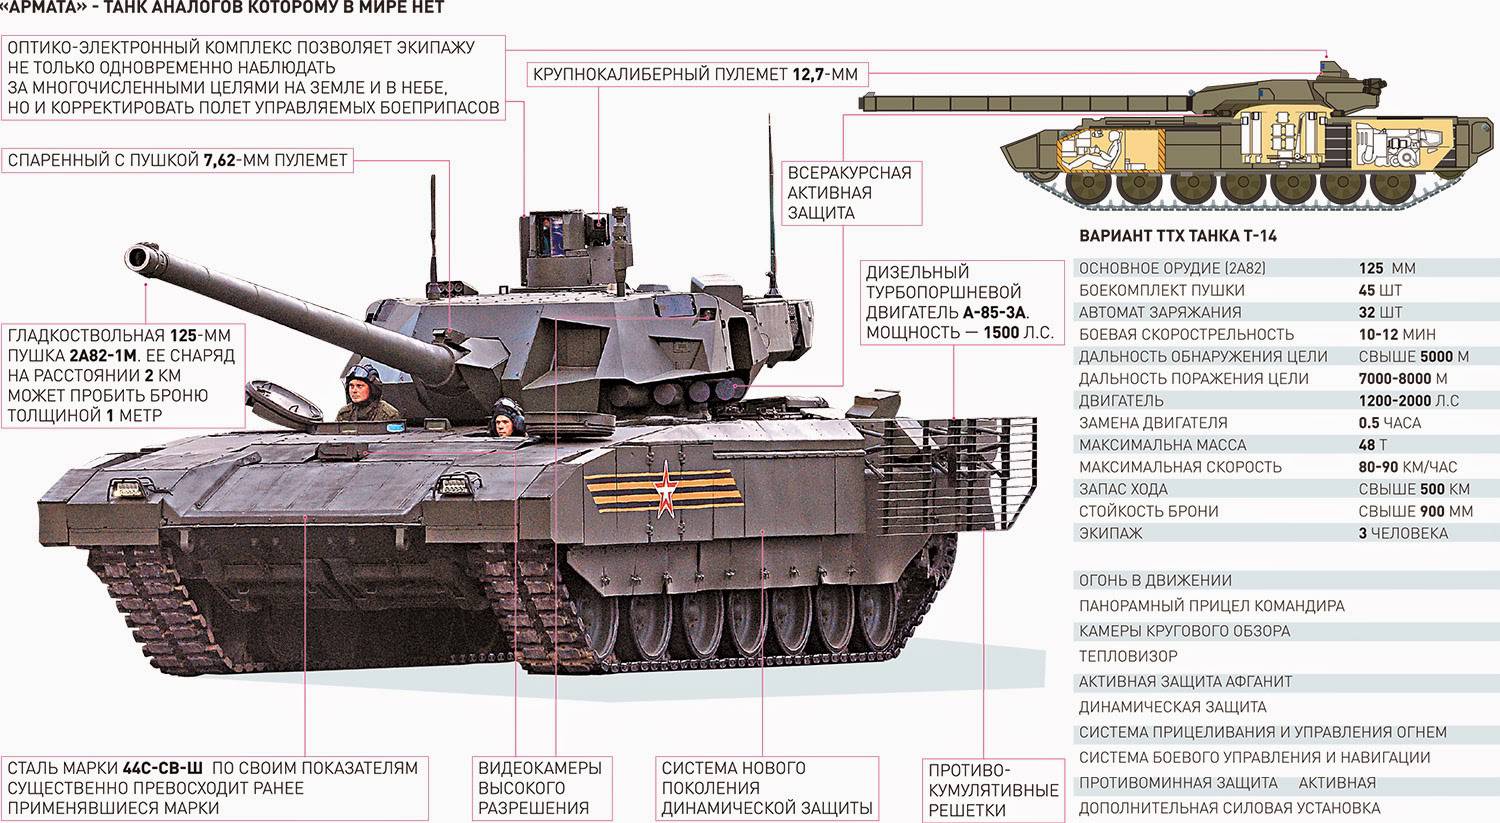 Сколько тонн весит танк. ТТХ танка Армата т-14. Танк т-14 технические характеристики. Вес танка Армата т-14. Характеристики танка т 14 Армата.